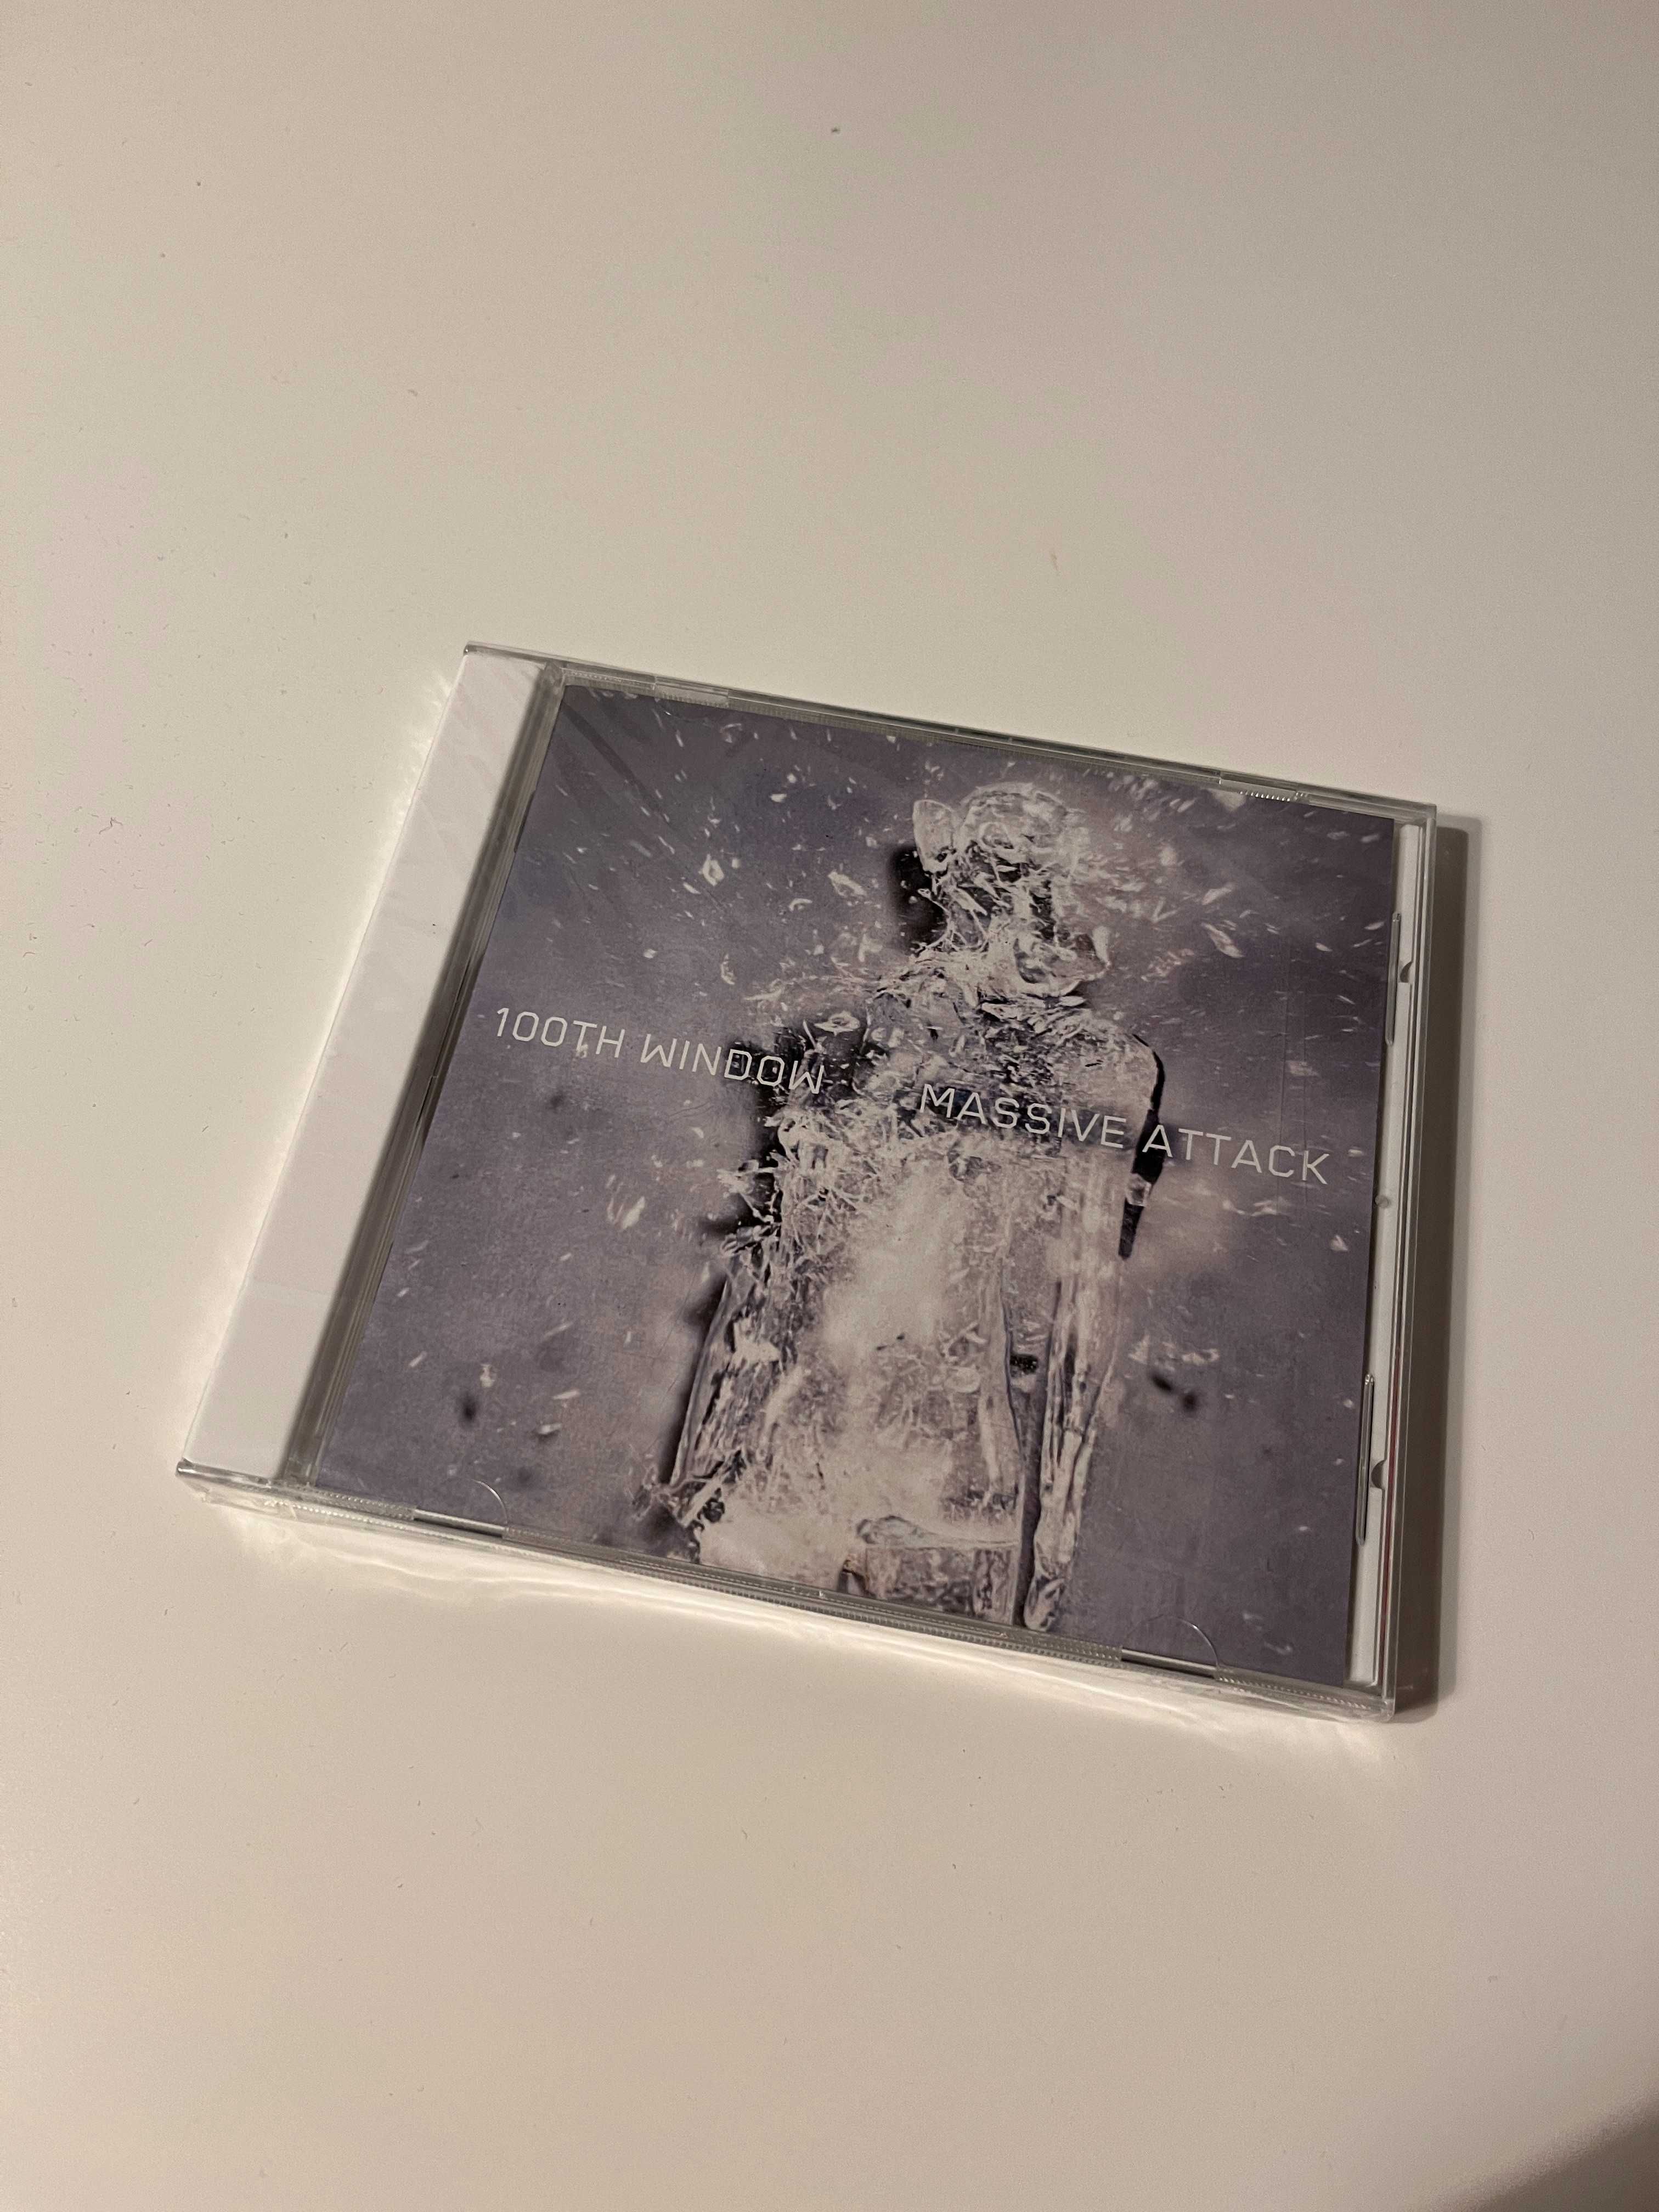 Massive Attack - 100th window (zafoliowana, płyta CD)